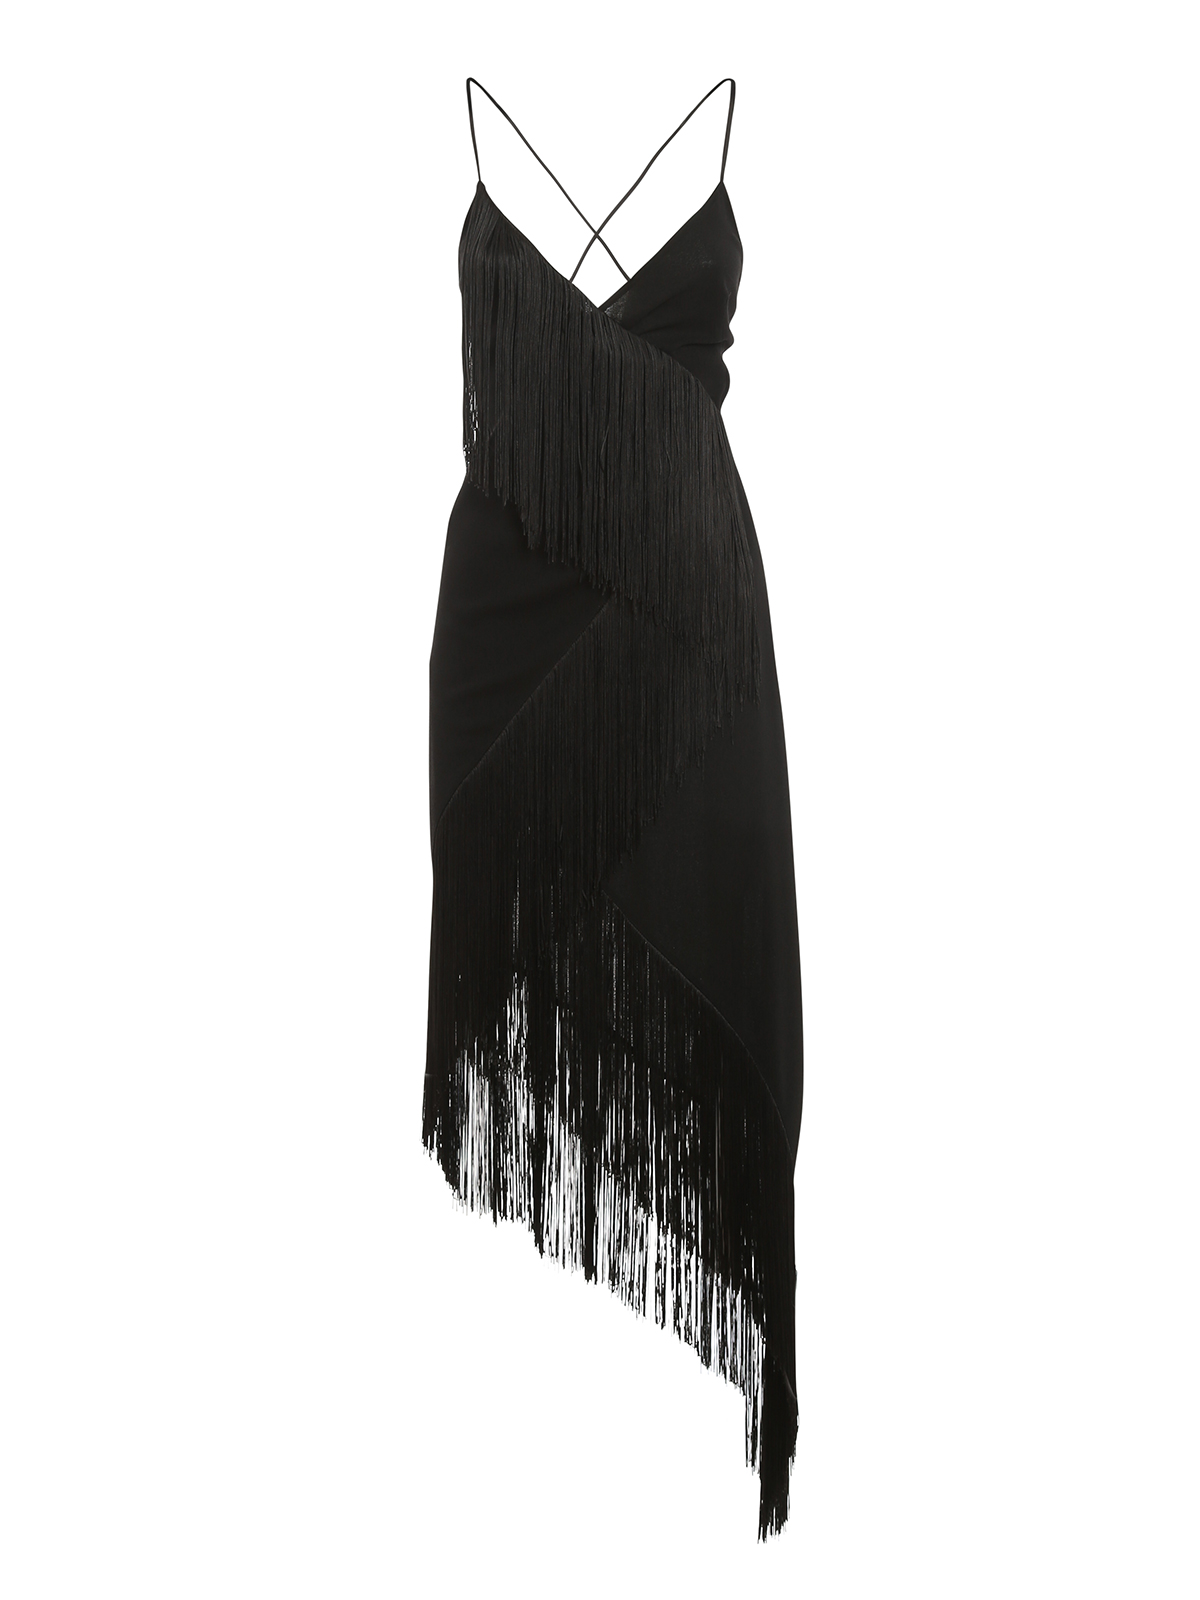 Givenchy, Dress